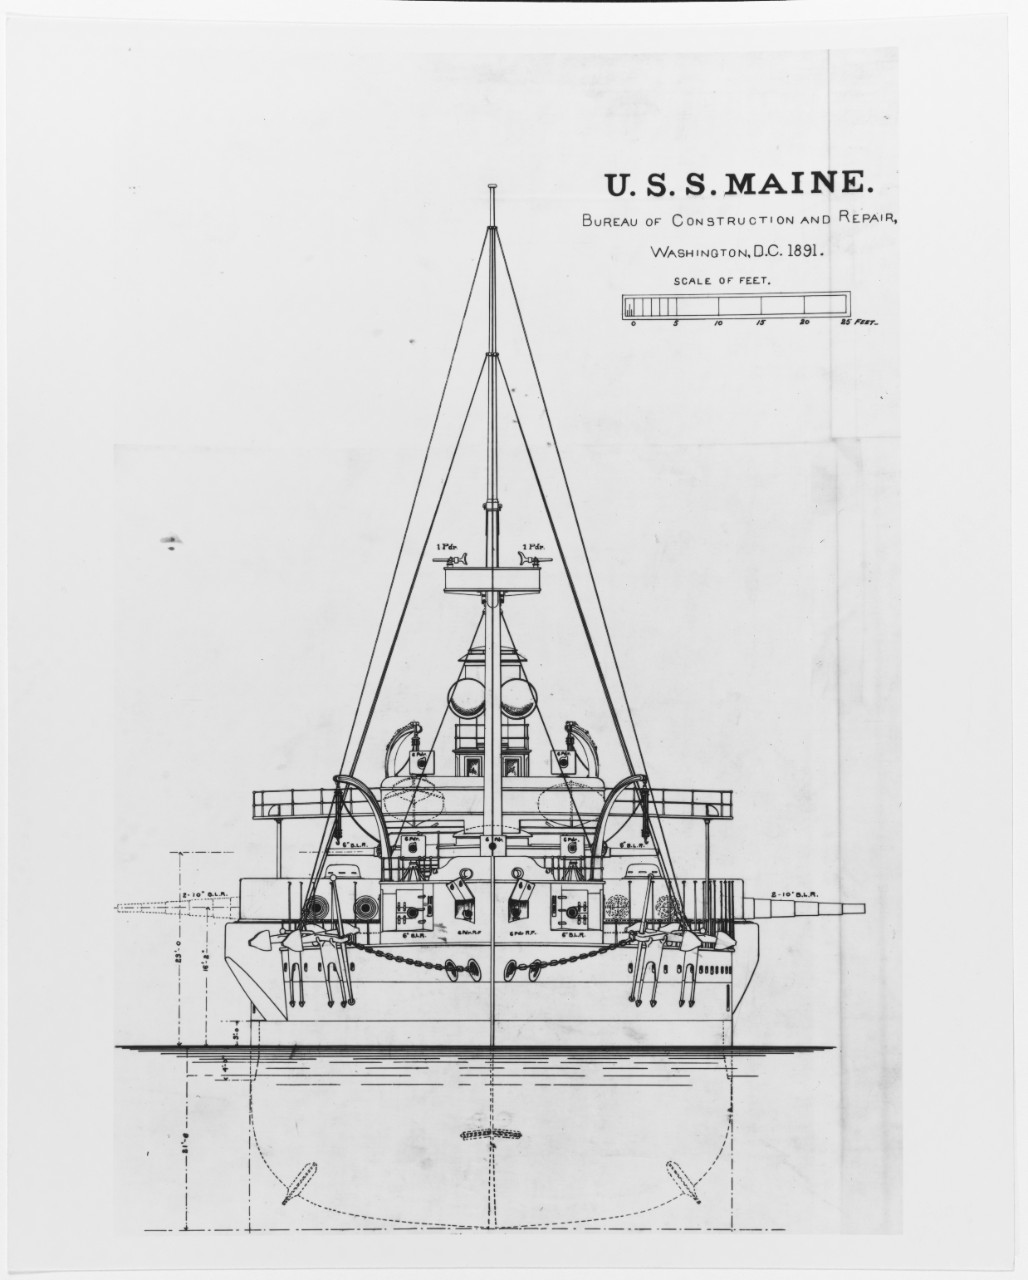 USS MAINE, 1895-98